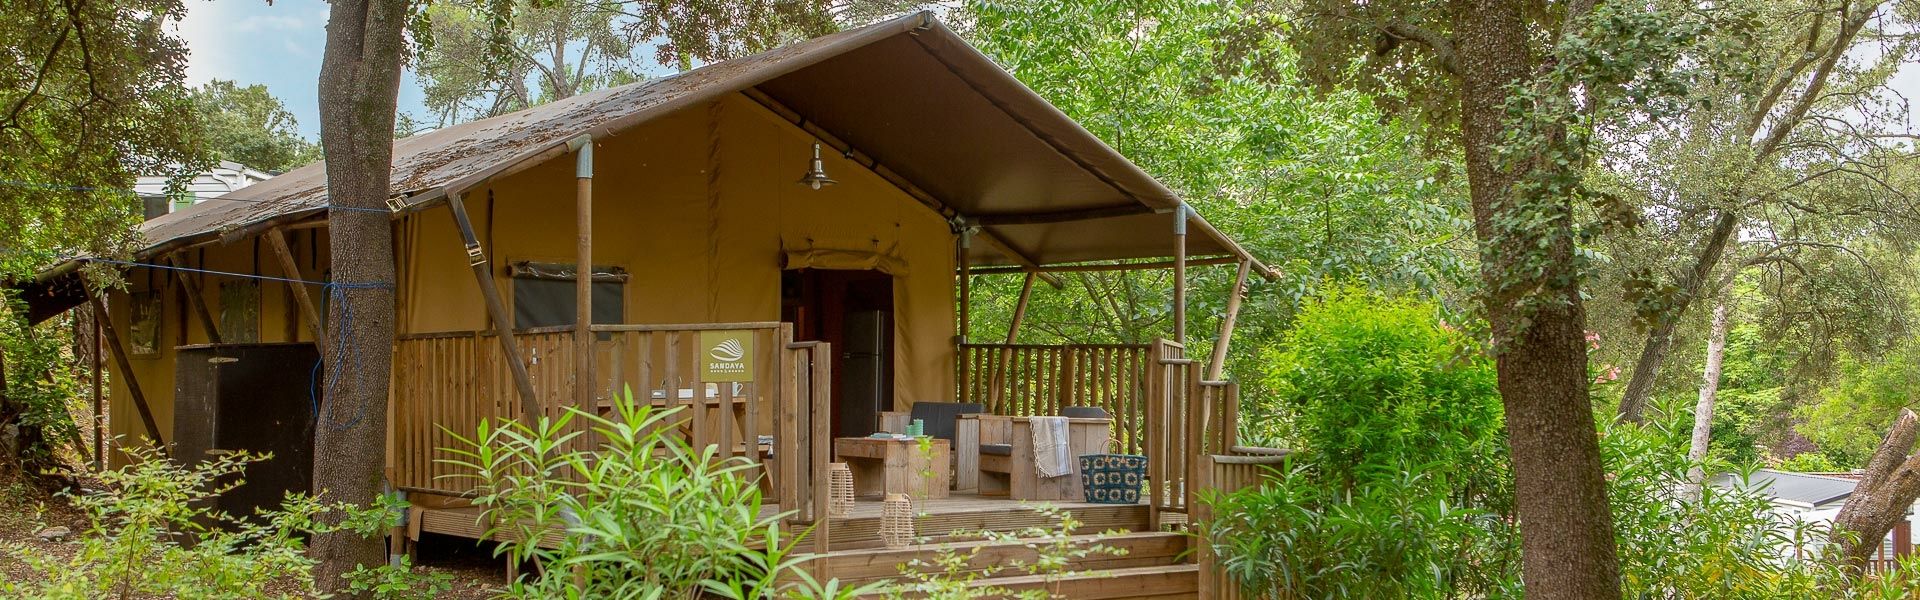 Camping Lodge-Zelte